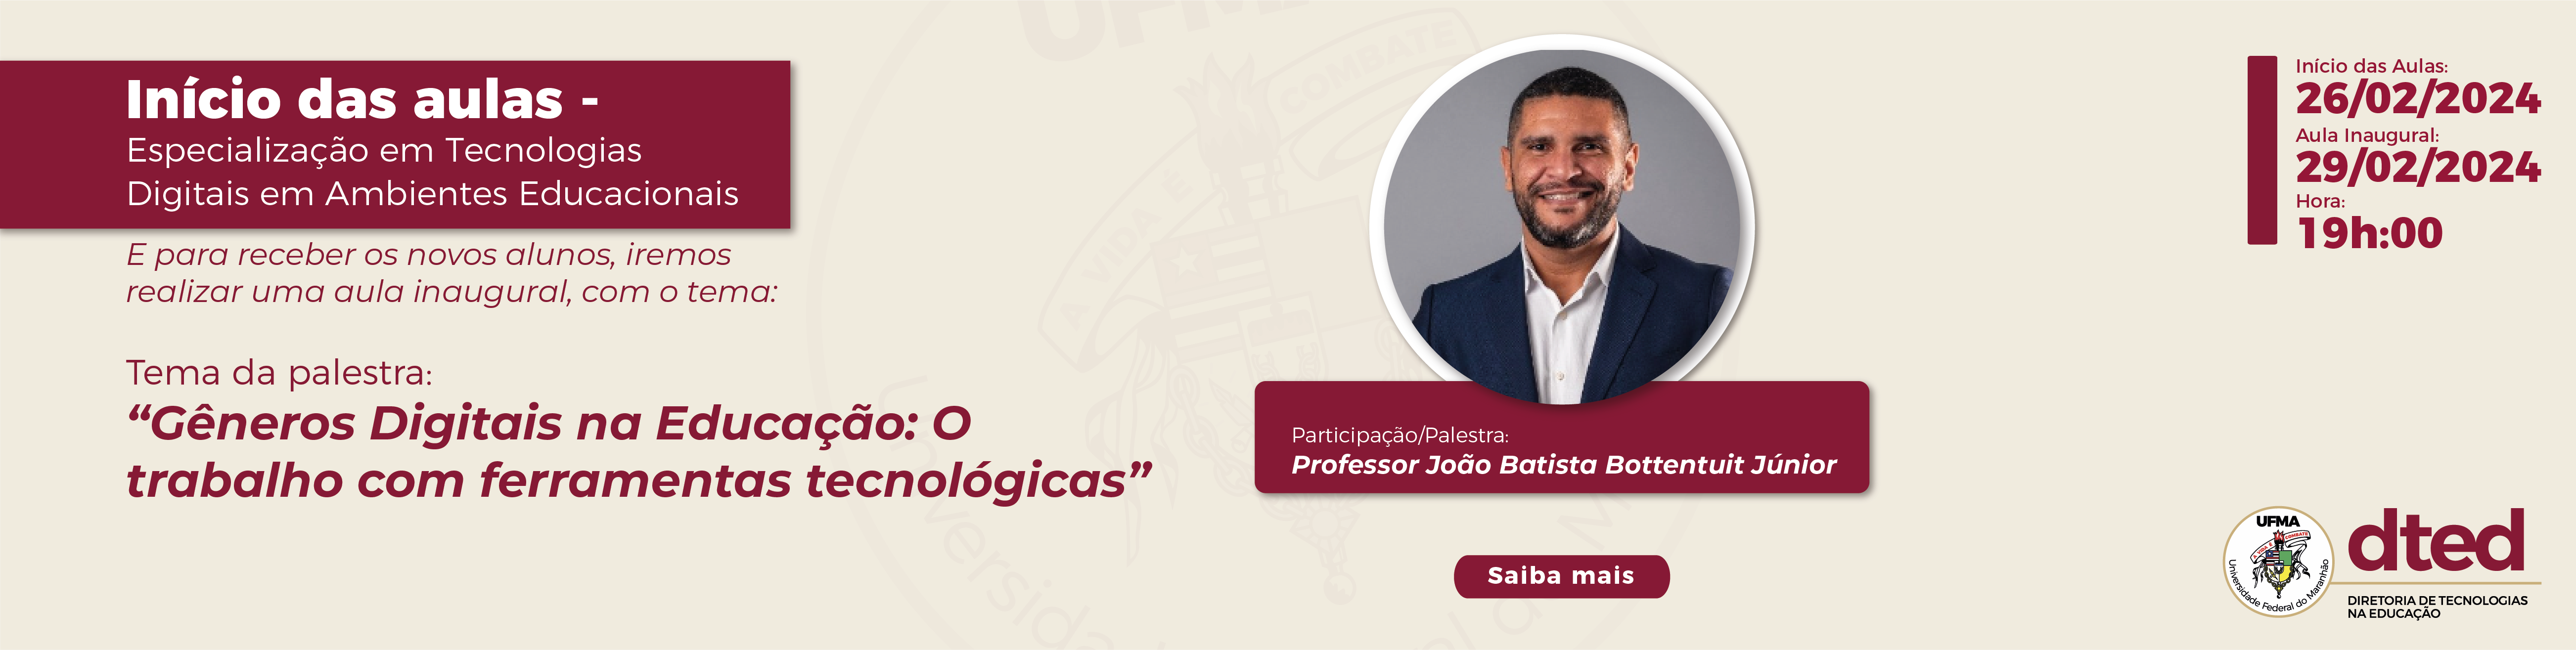 AULA INAUGURAL - Professor João Batista Bottentuit Júnior- Portal Banner.png